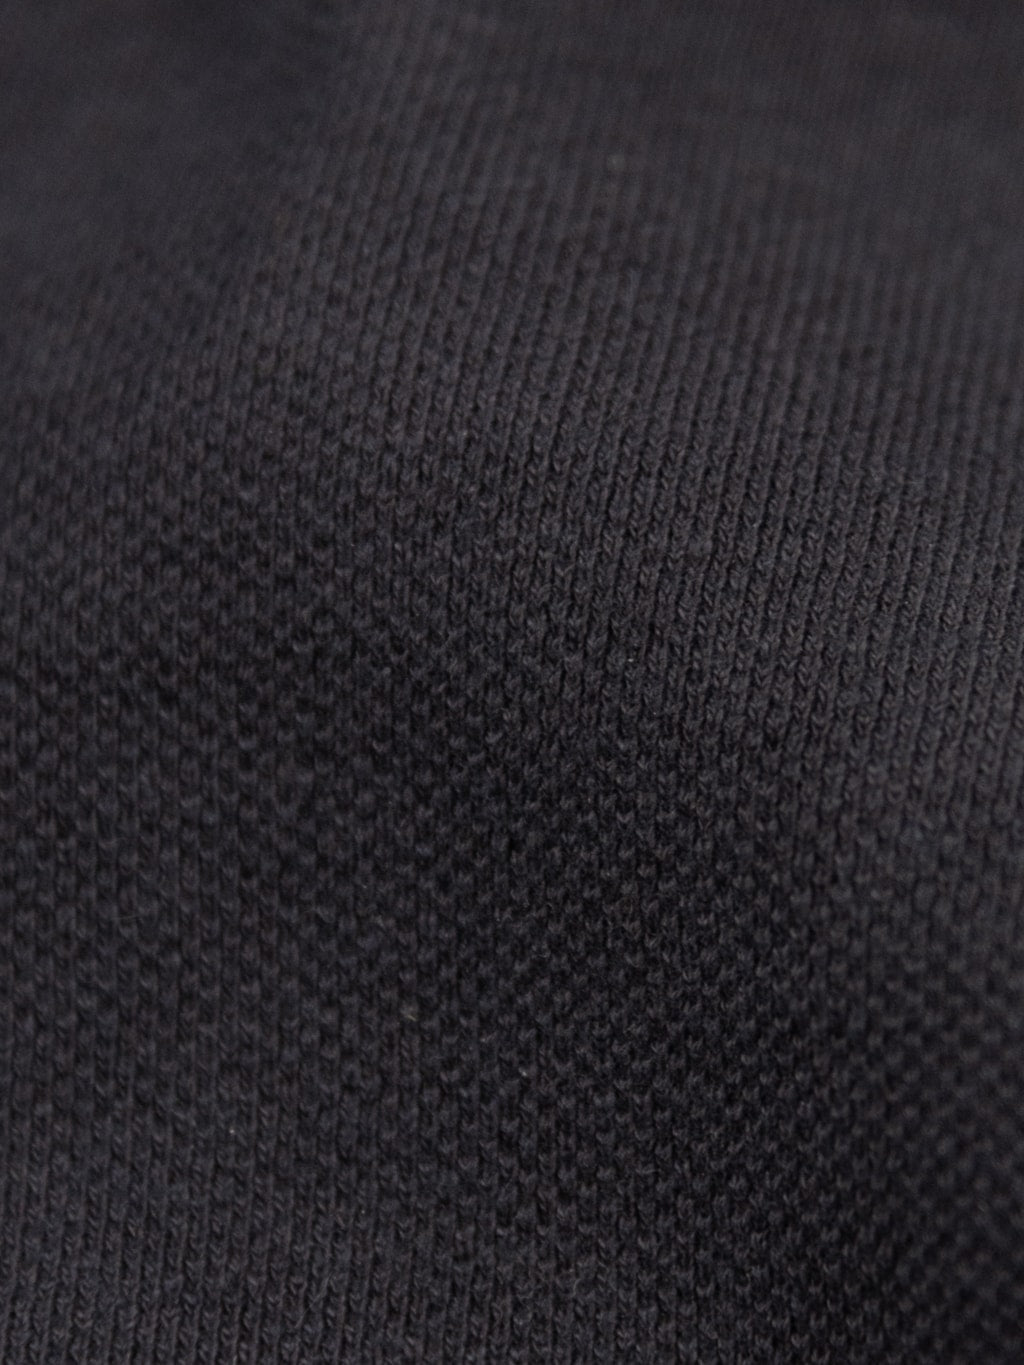 ues polo shirt black cotton pique fabric texture